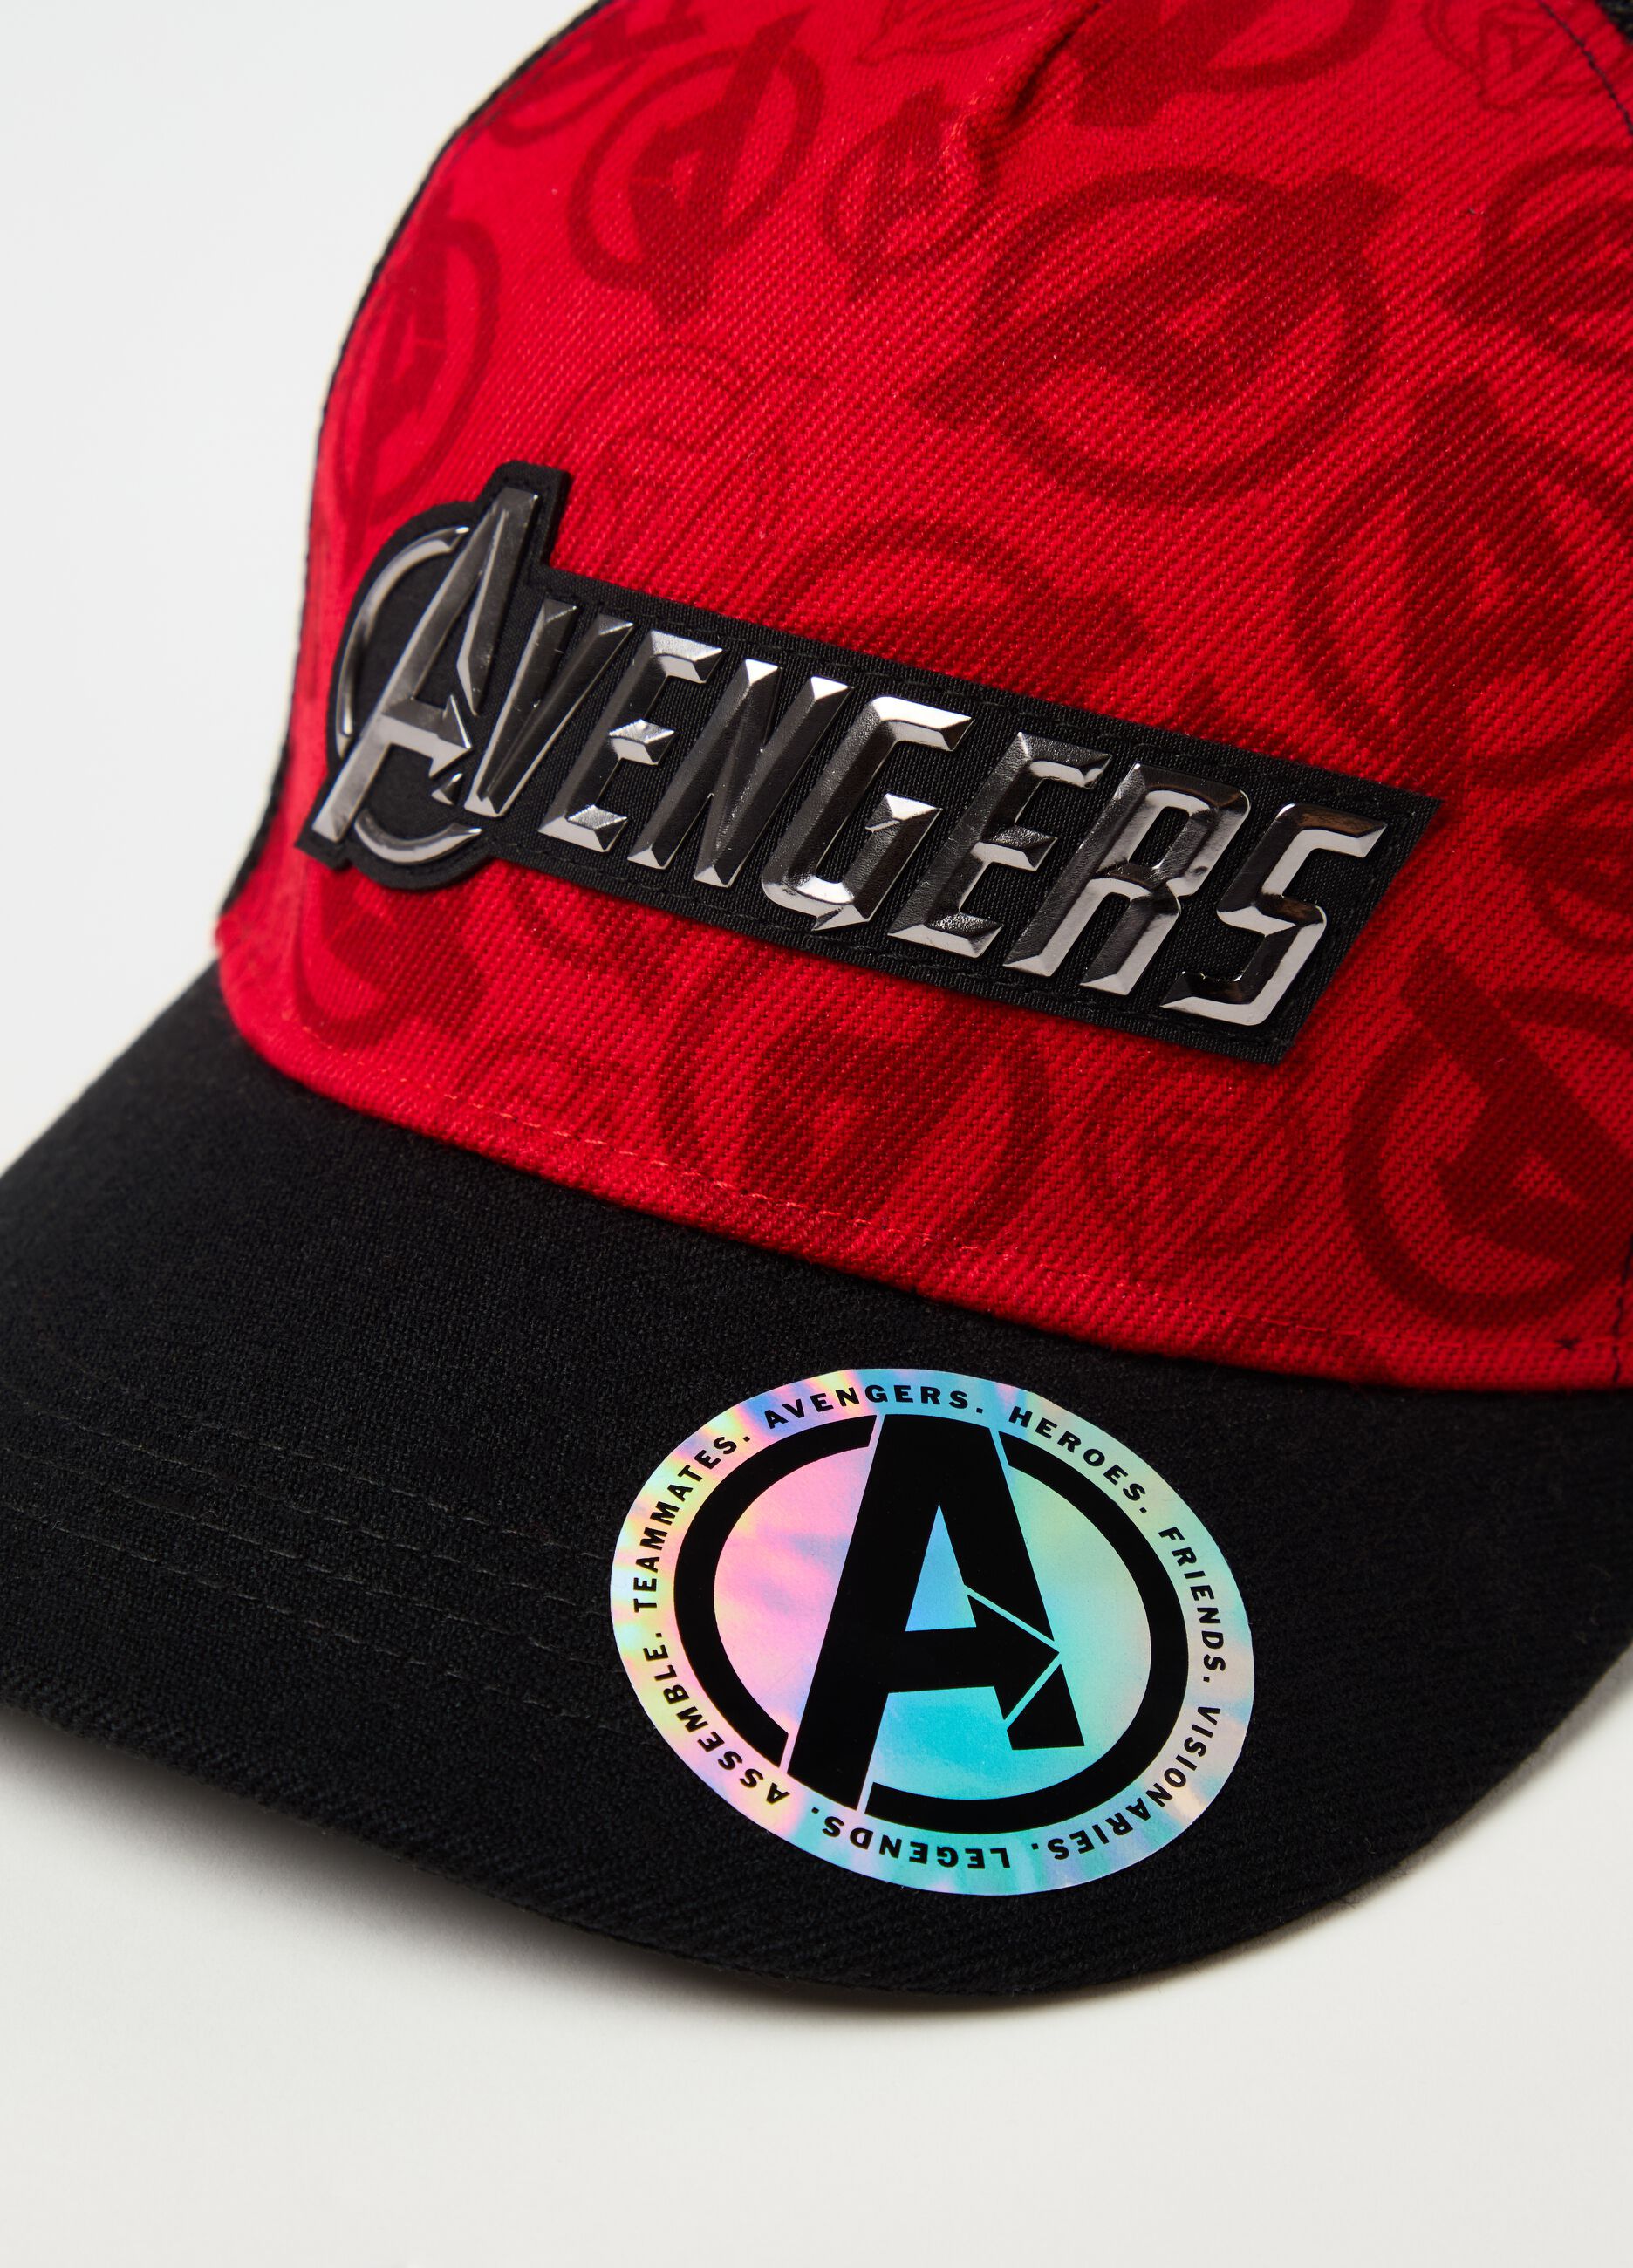 The Avengers baseball cap